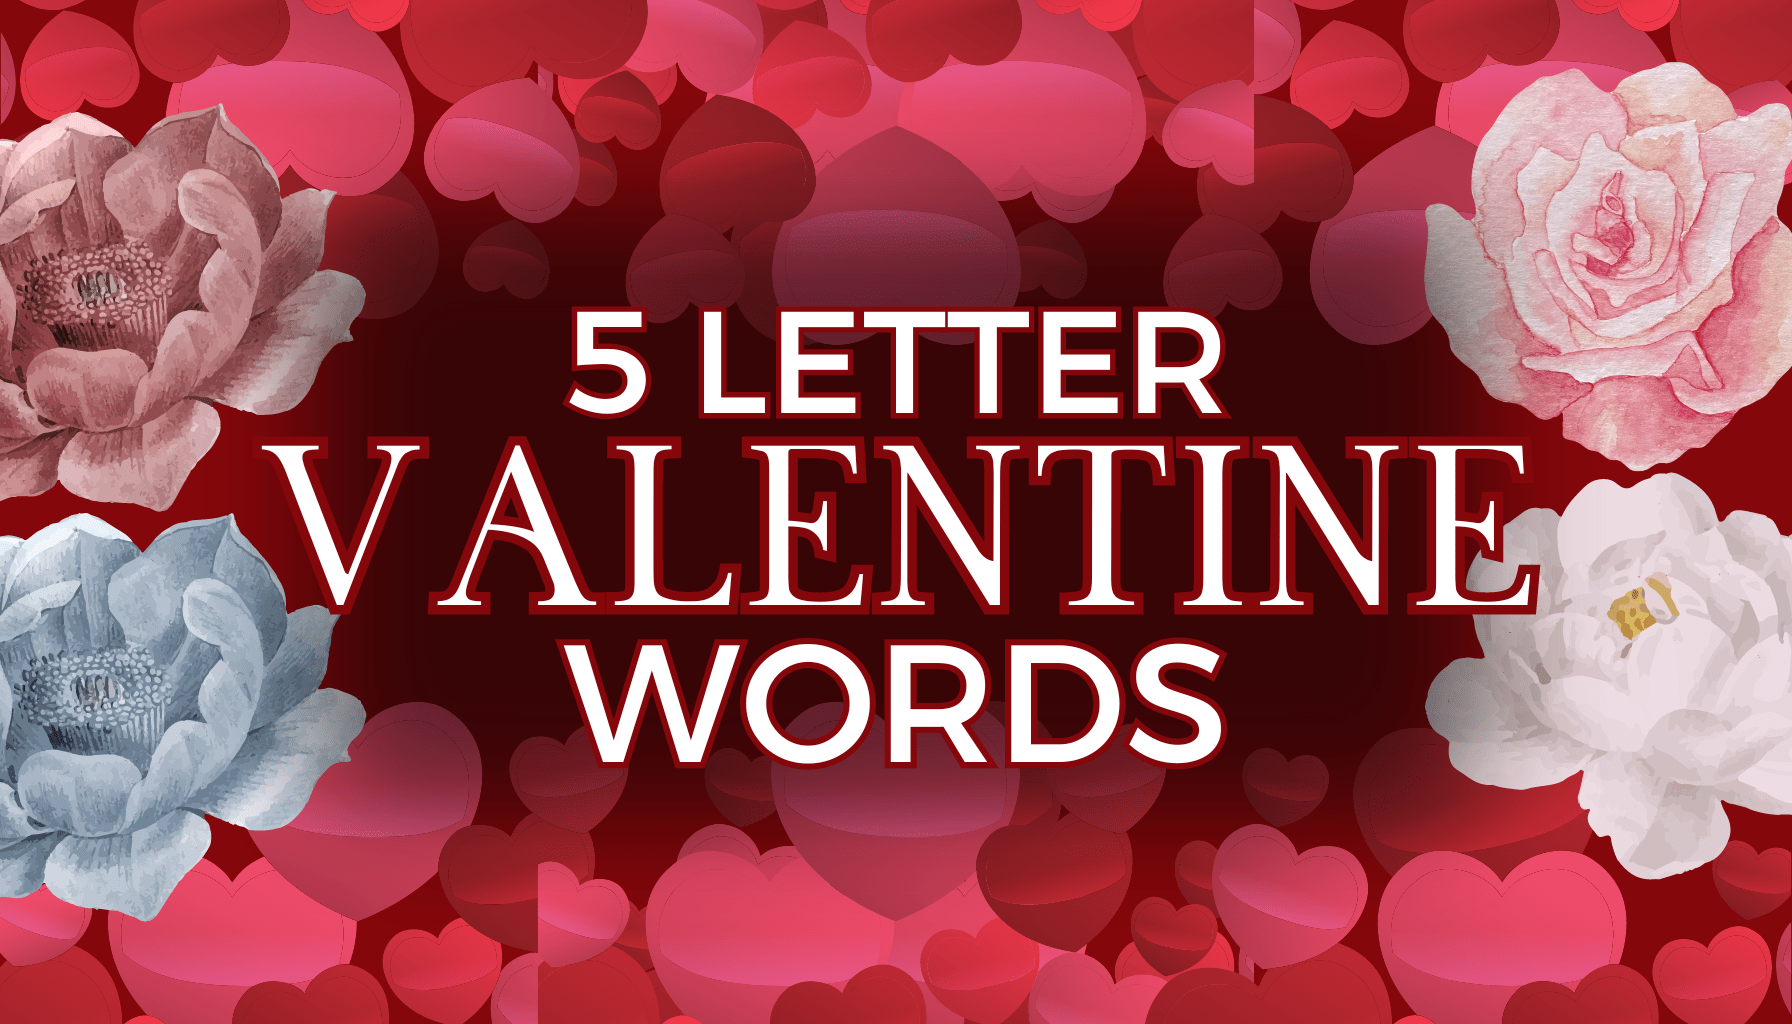 5 letter Valentine words